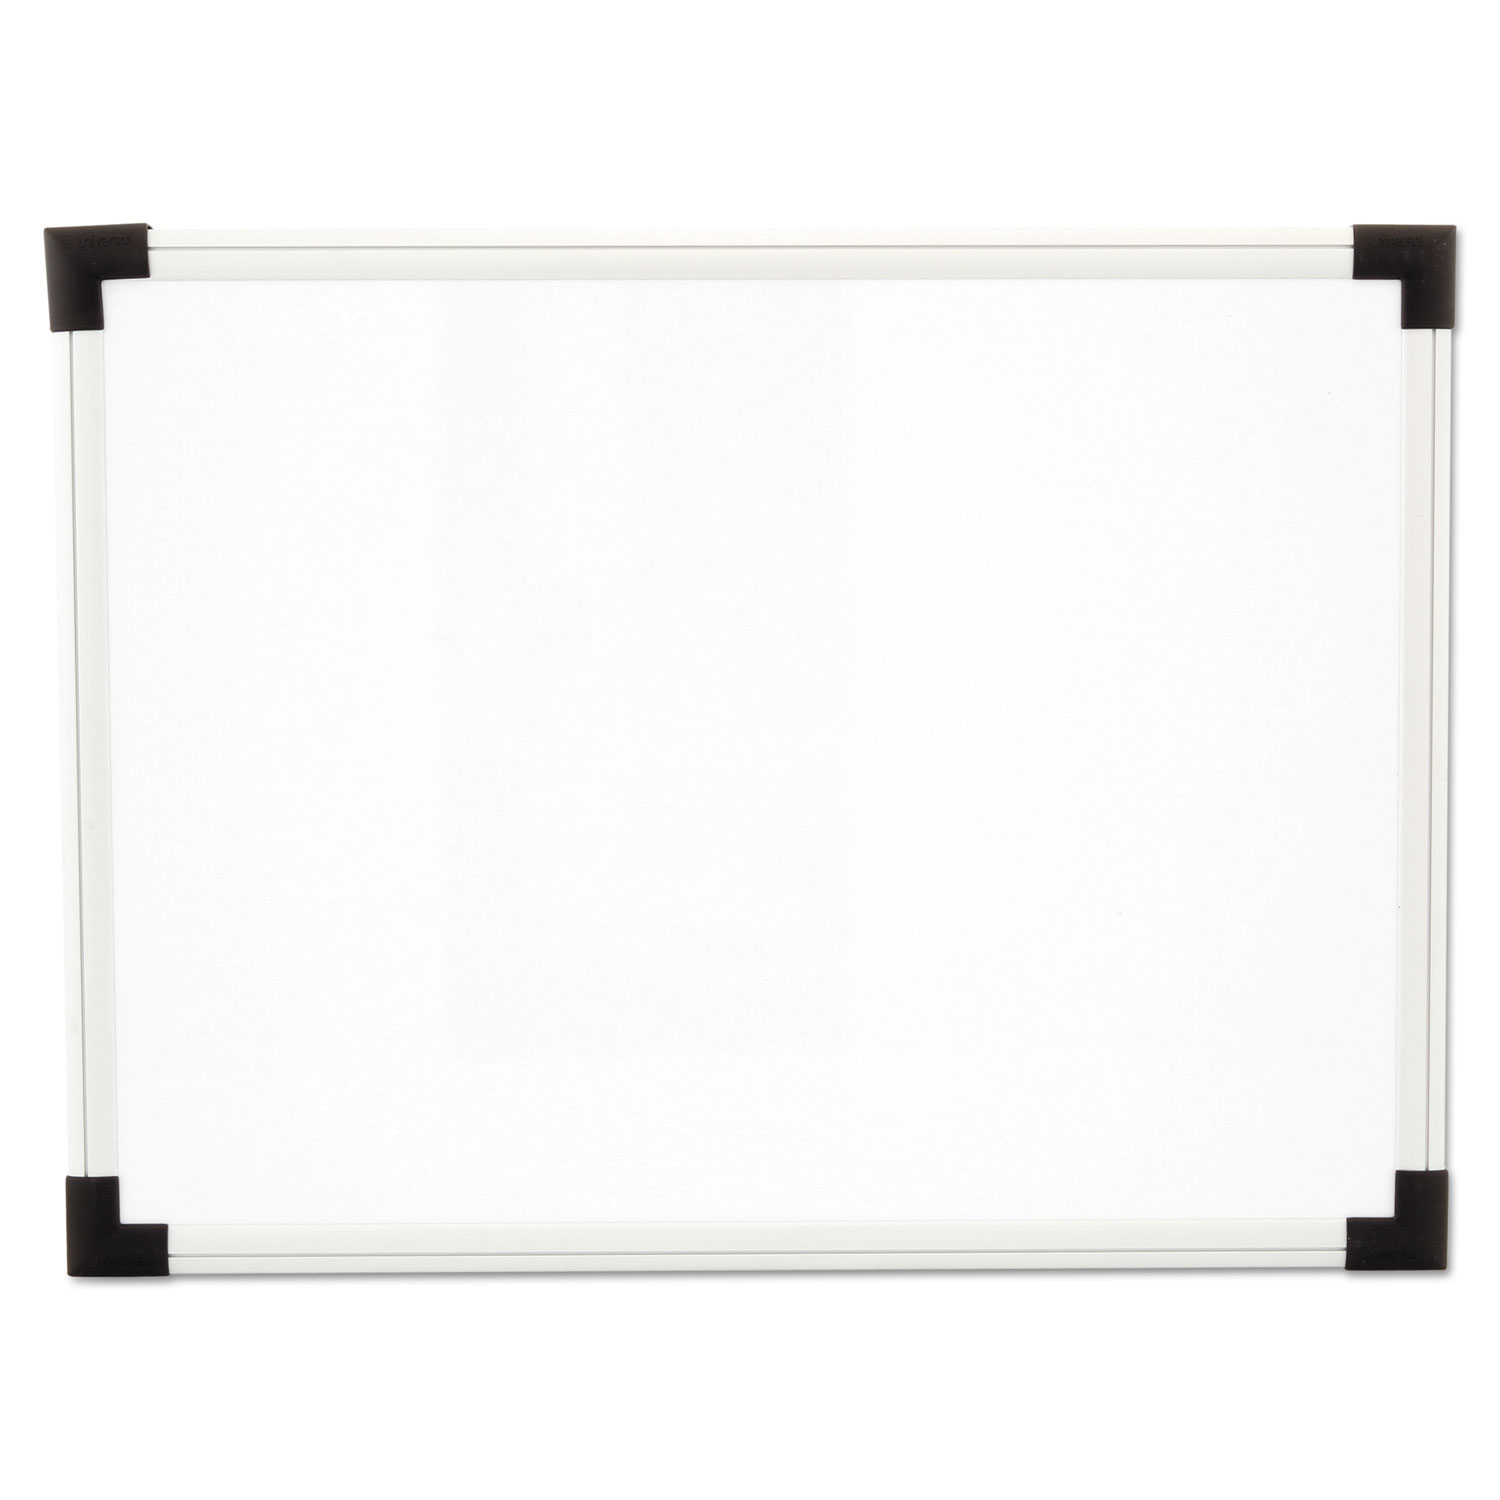  Universal UNV43722 Dry Erase Board, Melamine, 24 x 18, White, Black/Gray, Aluminum/Plastic Frame (UNV43722) 